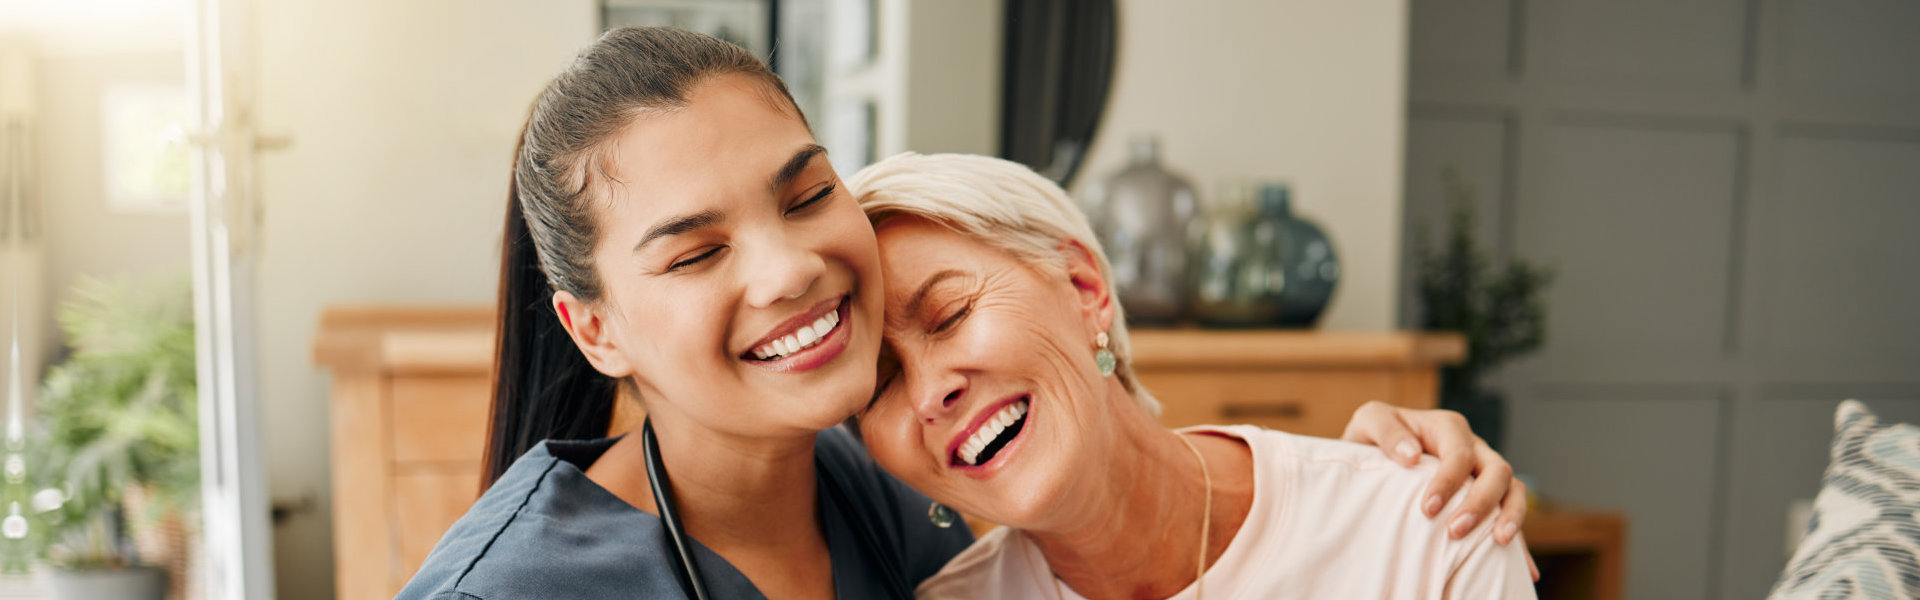 Nurse hugging an elderly woman and both smiling